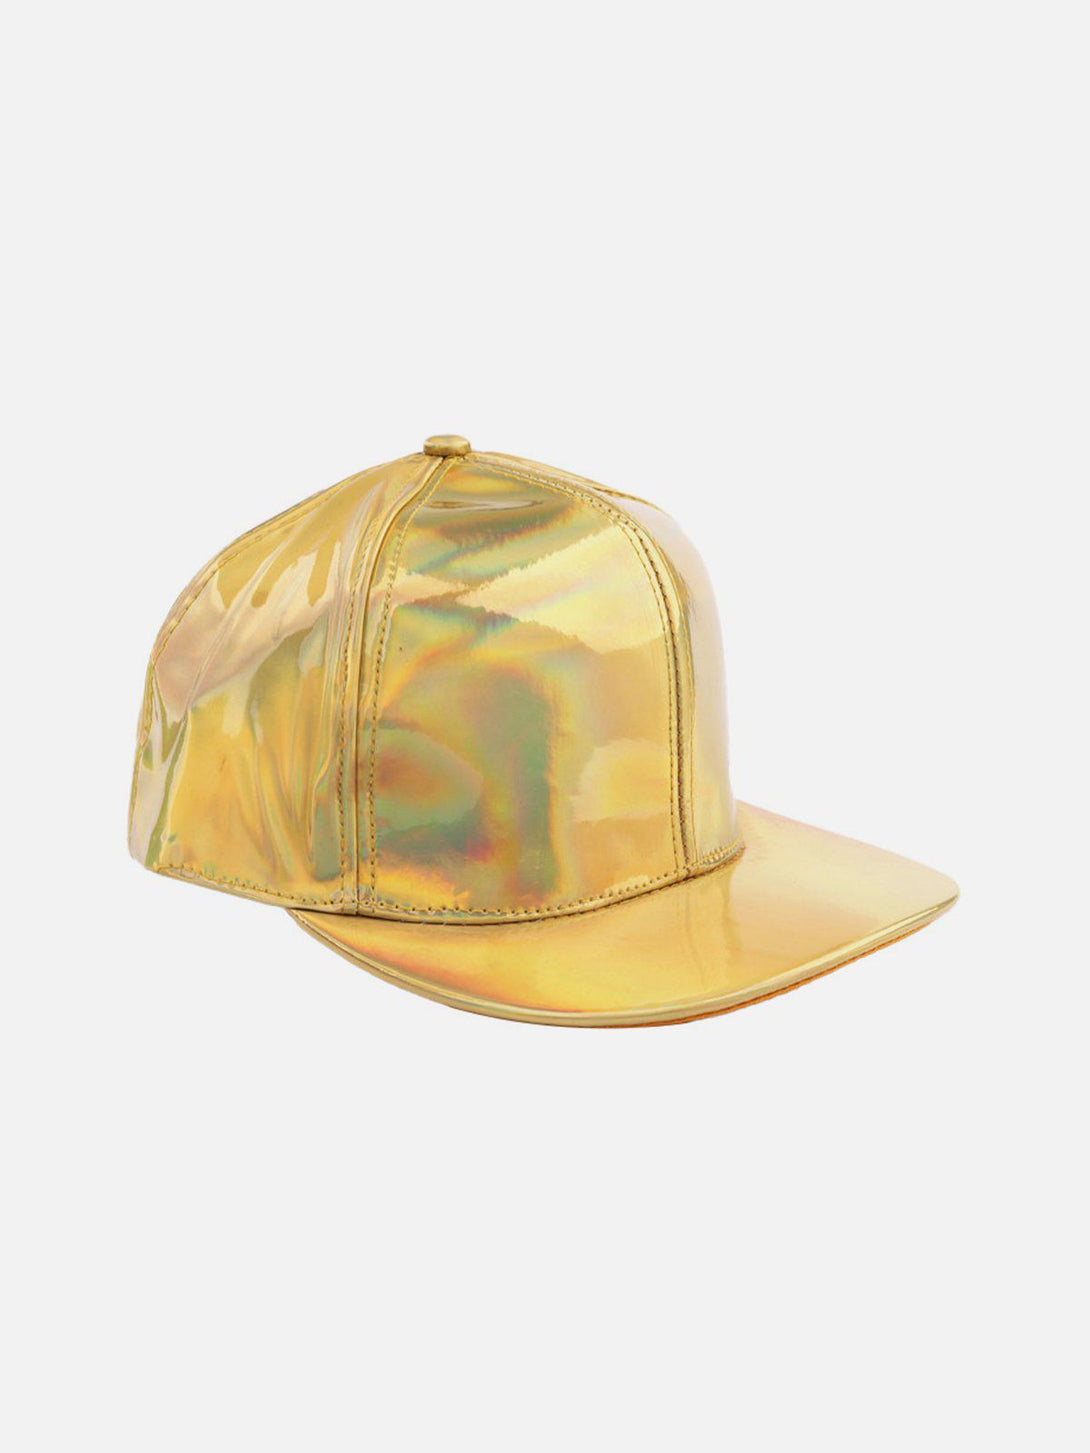 Majesda® - Laser PU Rainbow Baseball Cap- Outfit Ideas - Streetwear Fashion - majesda.com